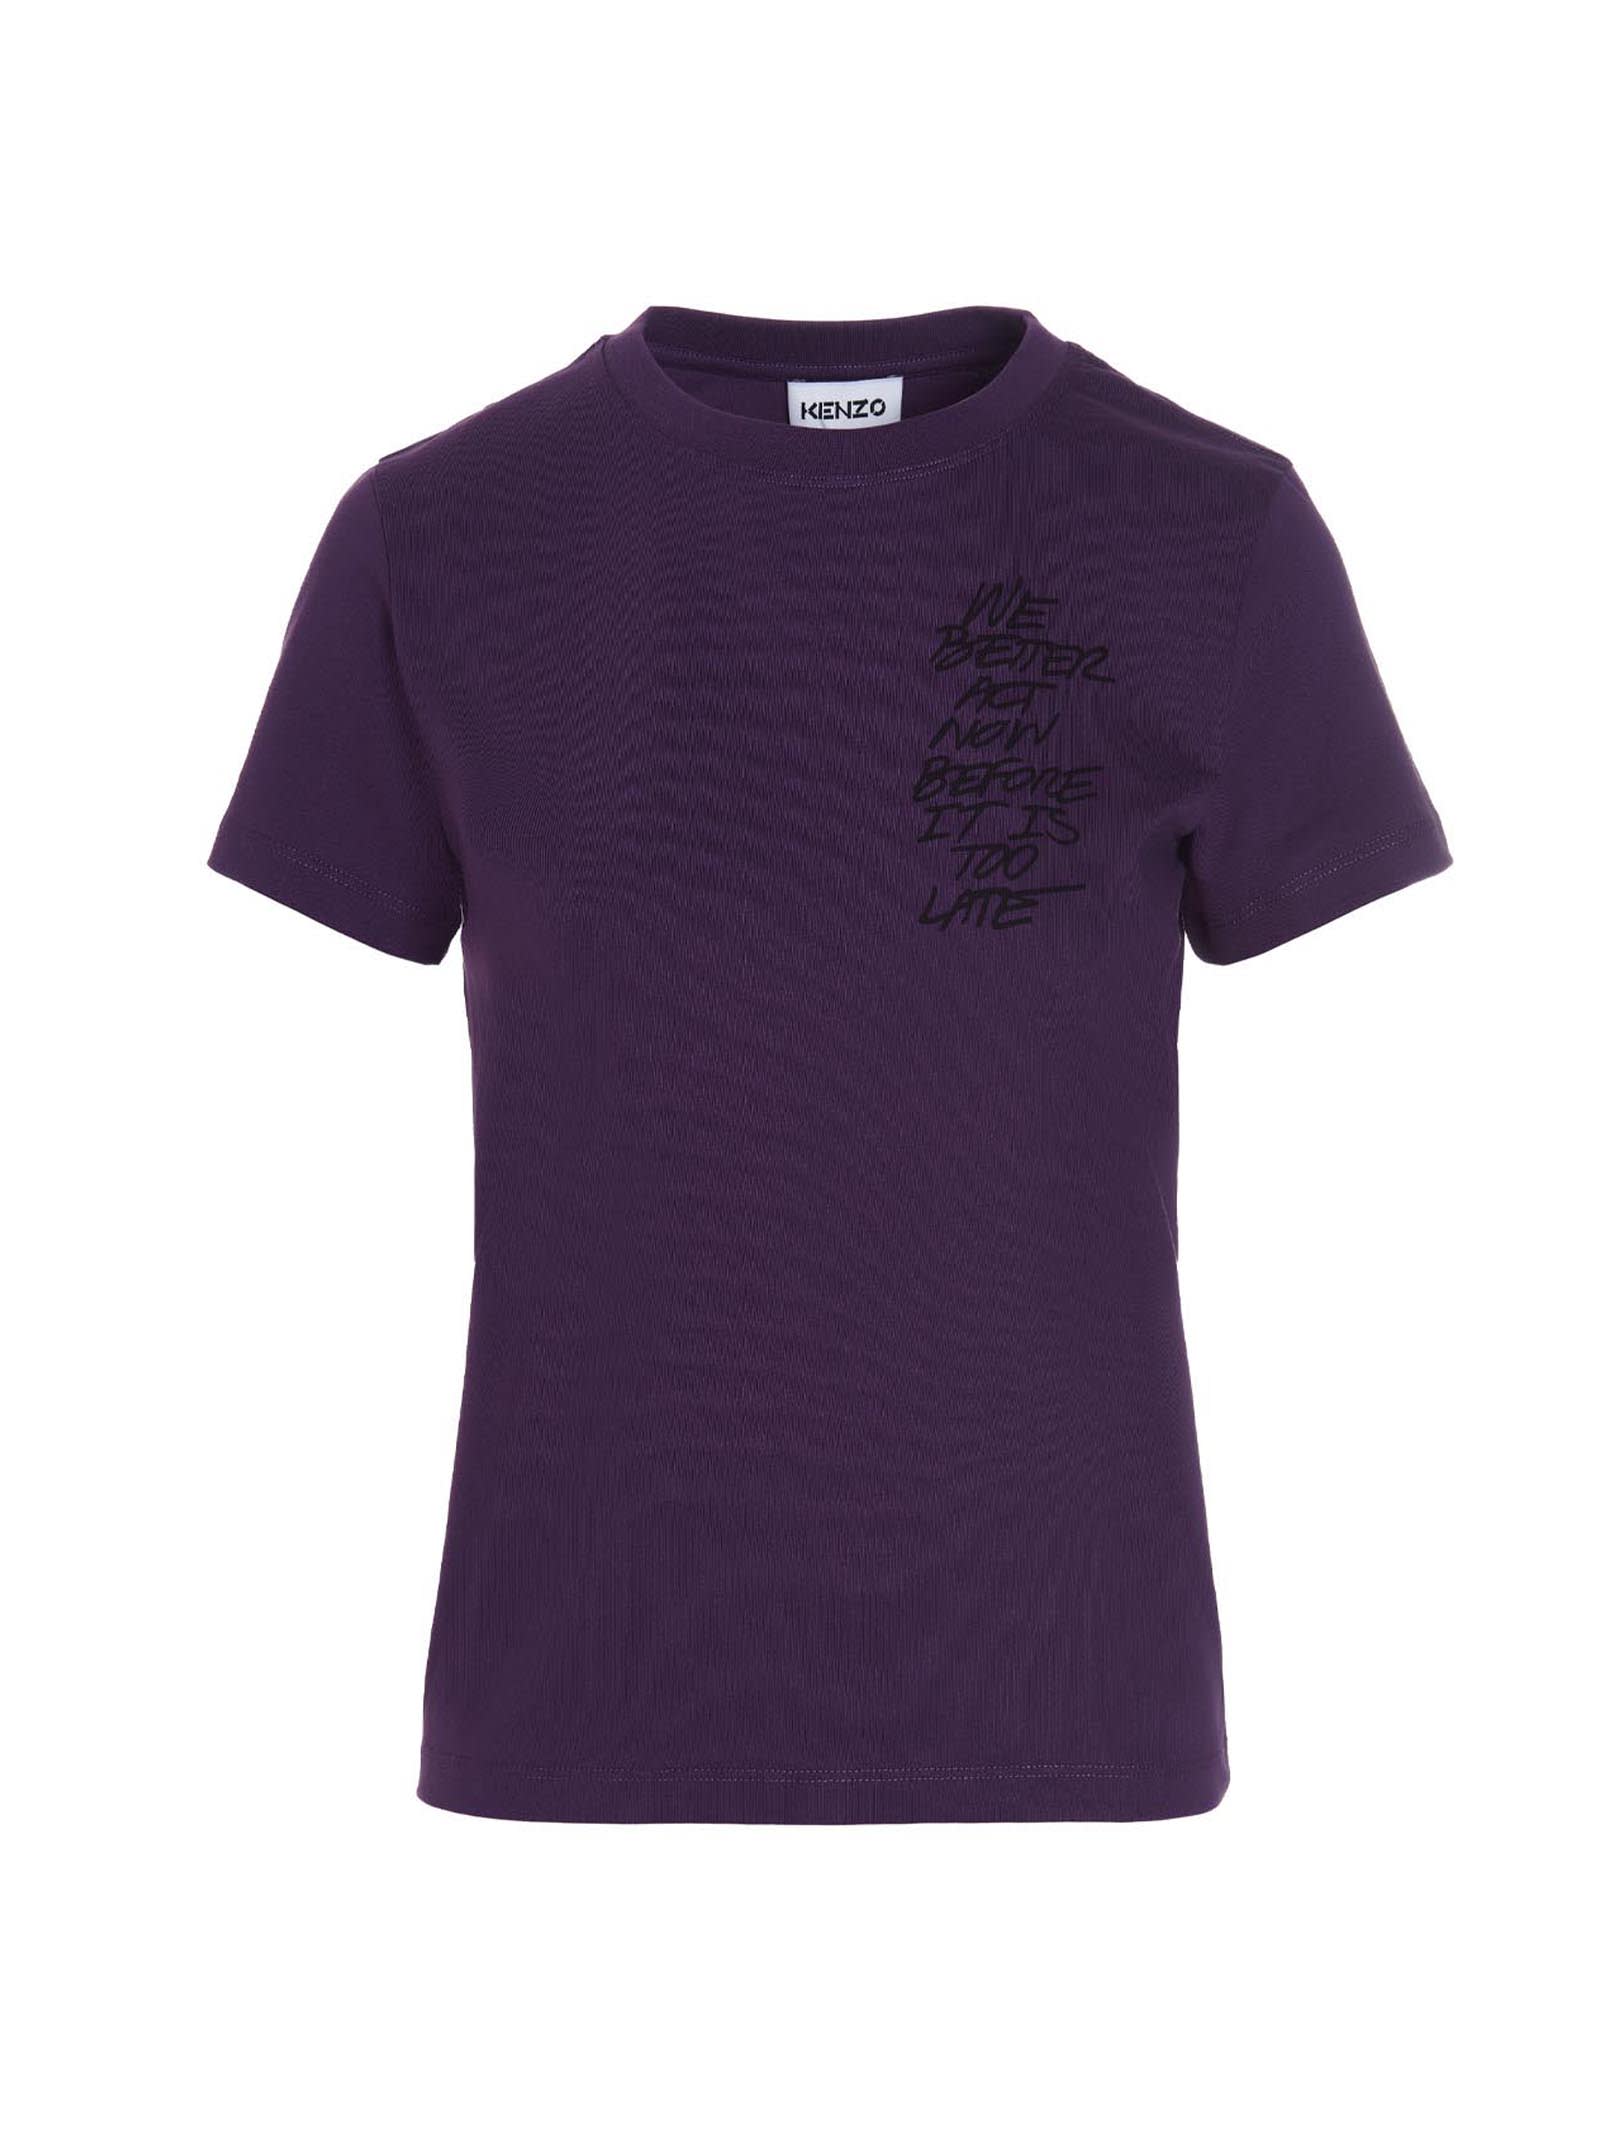 Kenzo X Wwf T-shirt In Purple | ModeSens